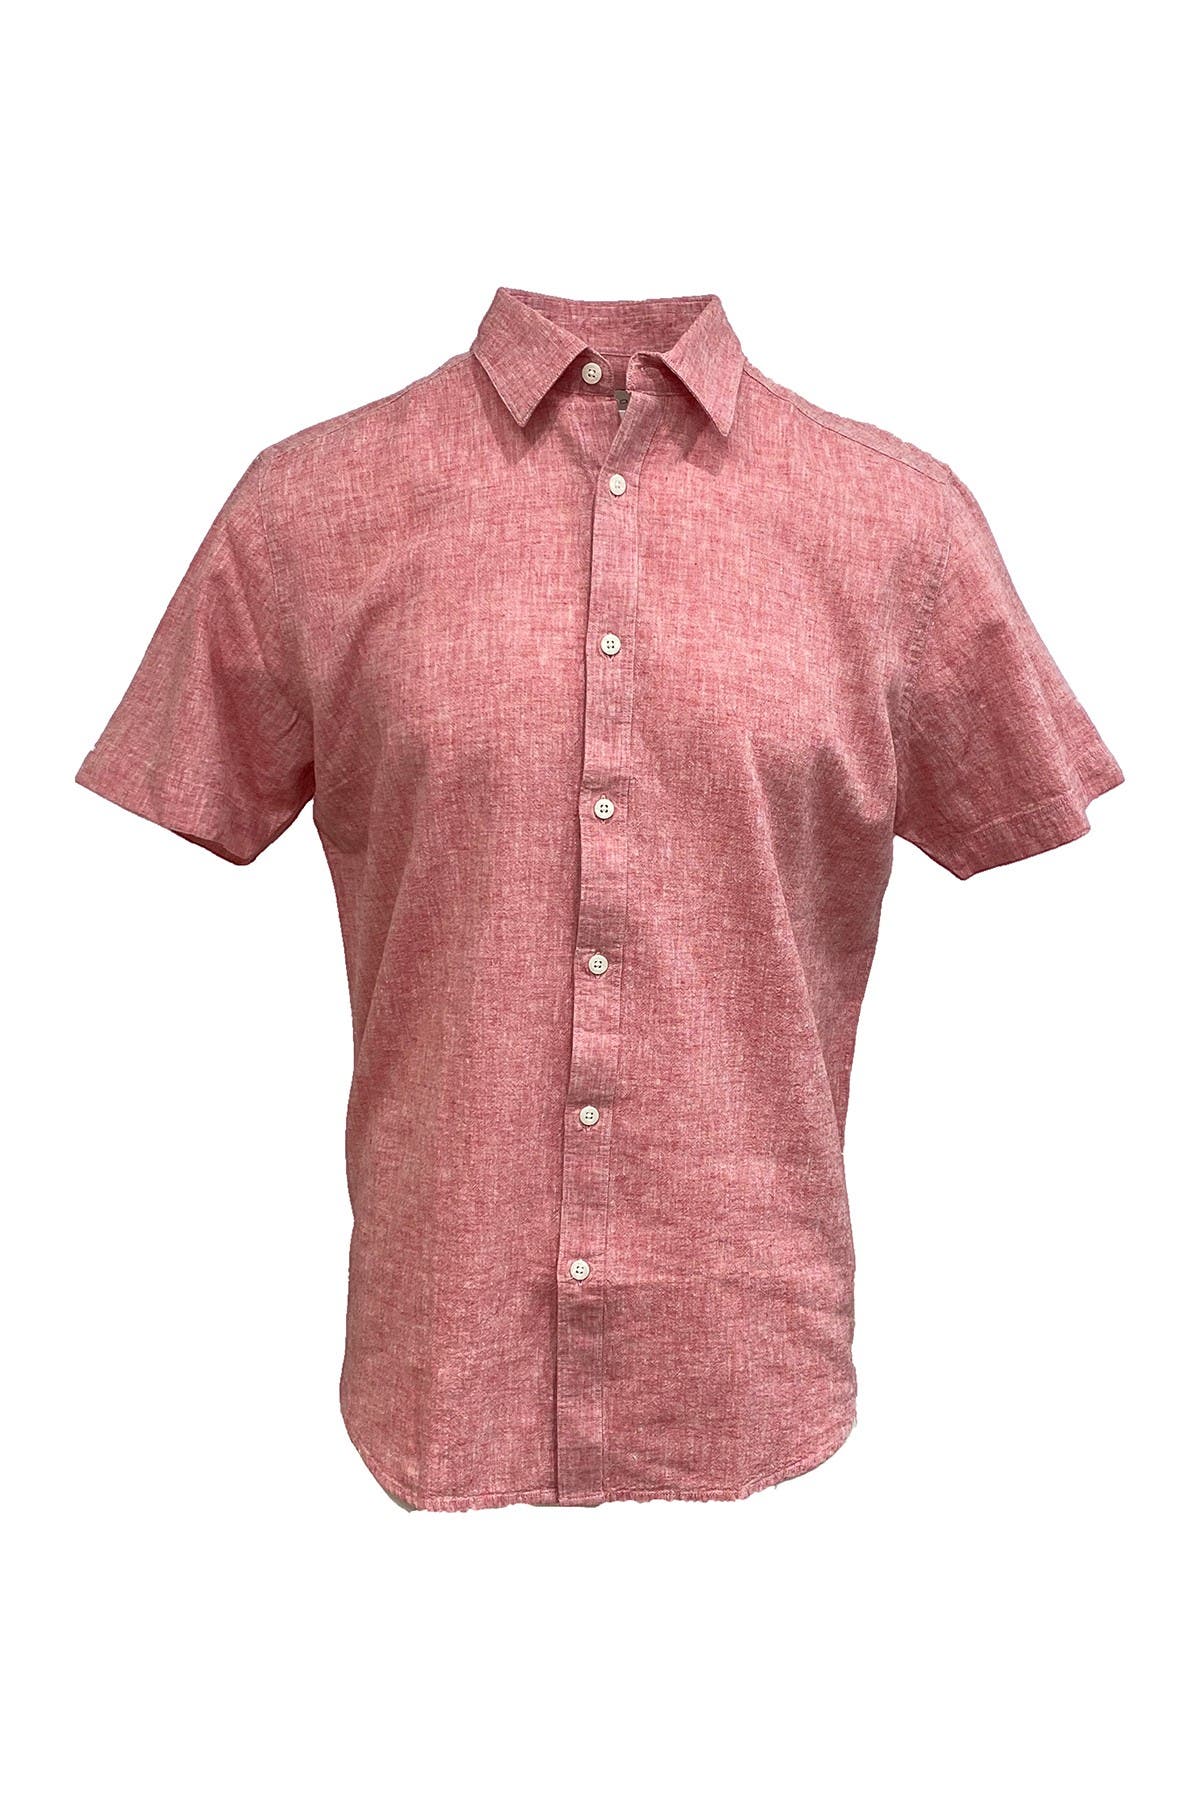 Coastaoro Key Largo Short Sleeve Regular Fit Shirt In Punch